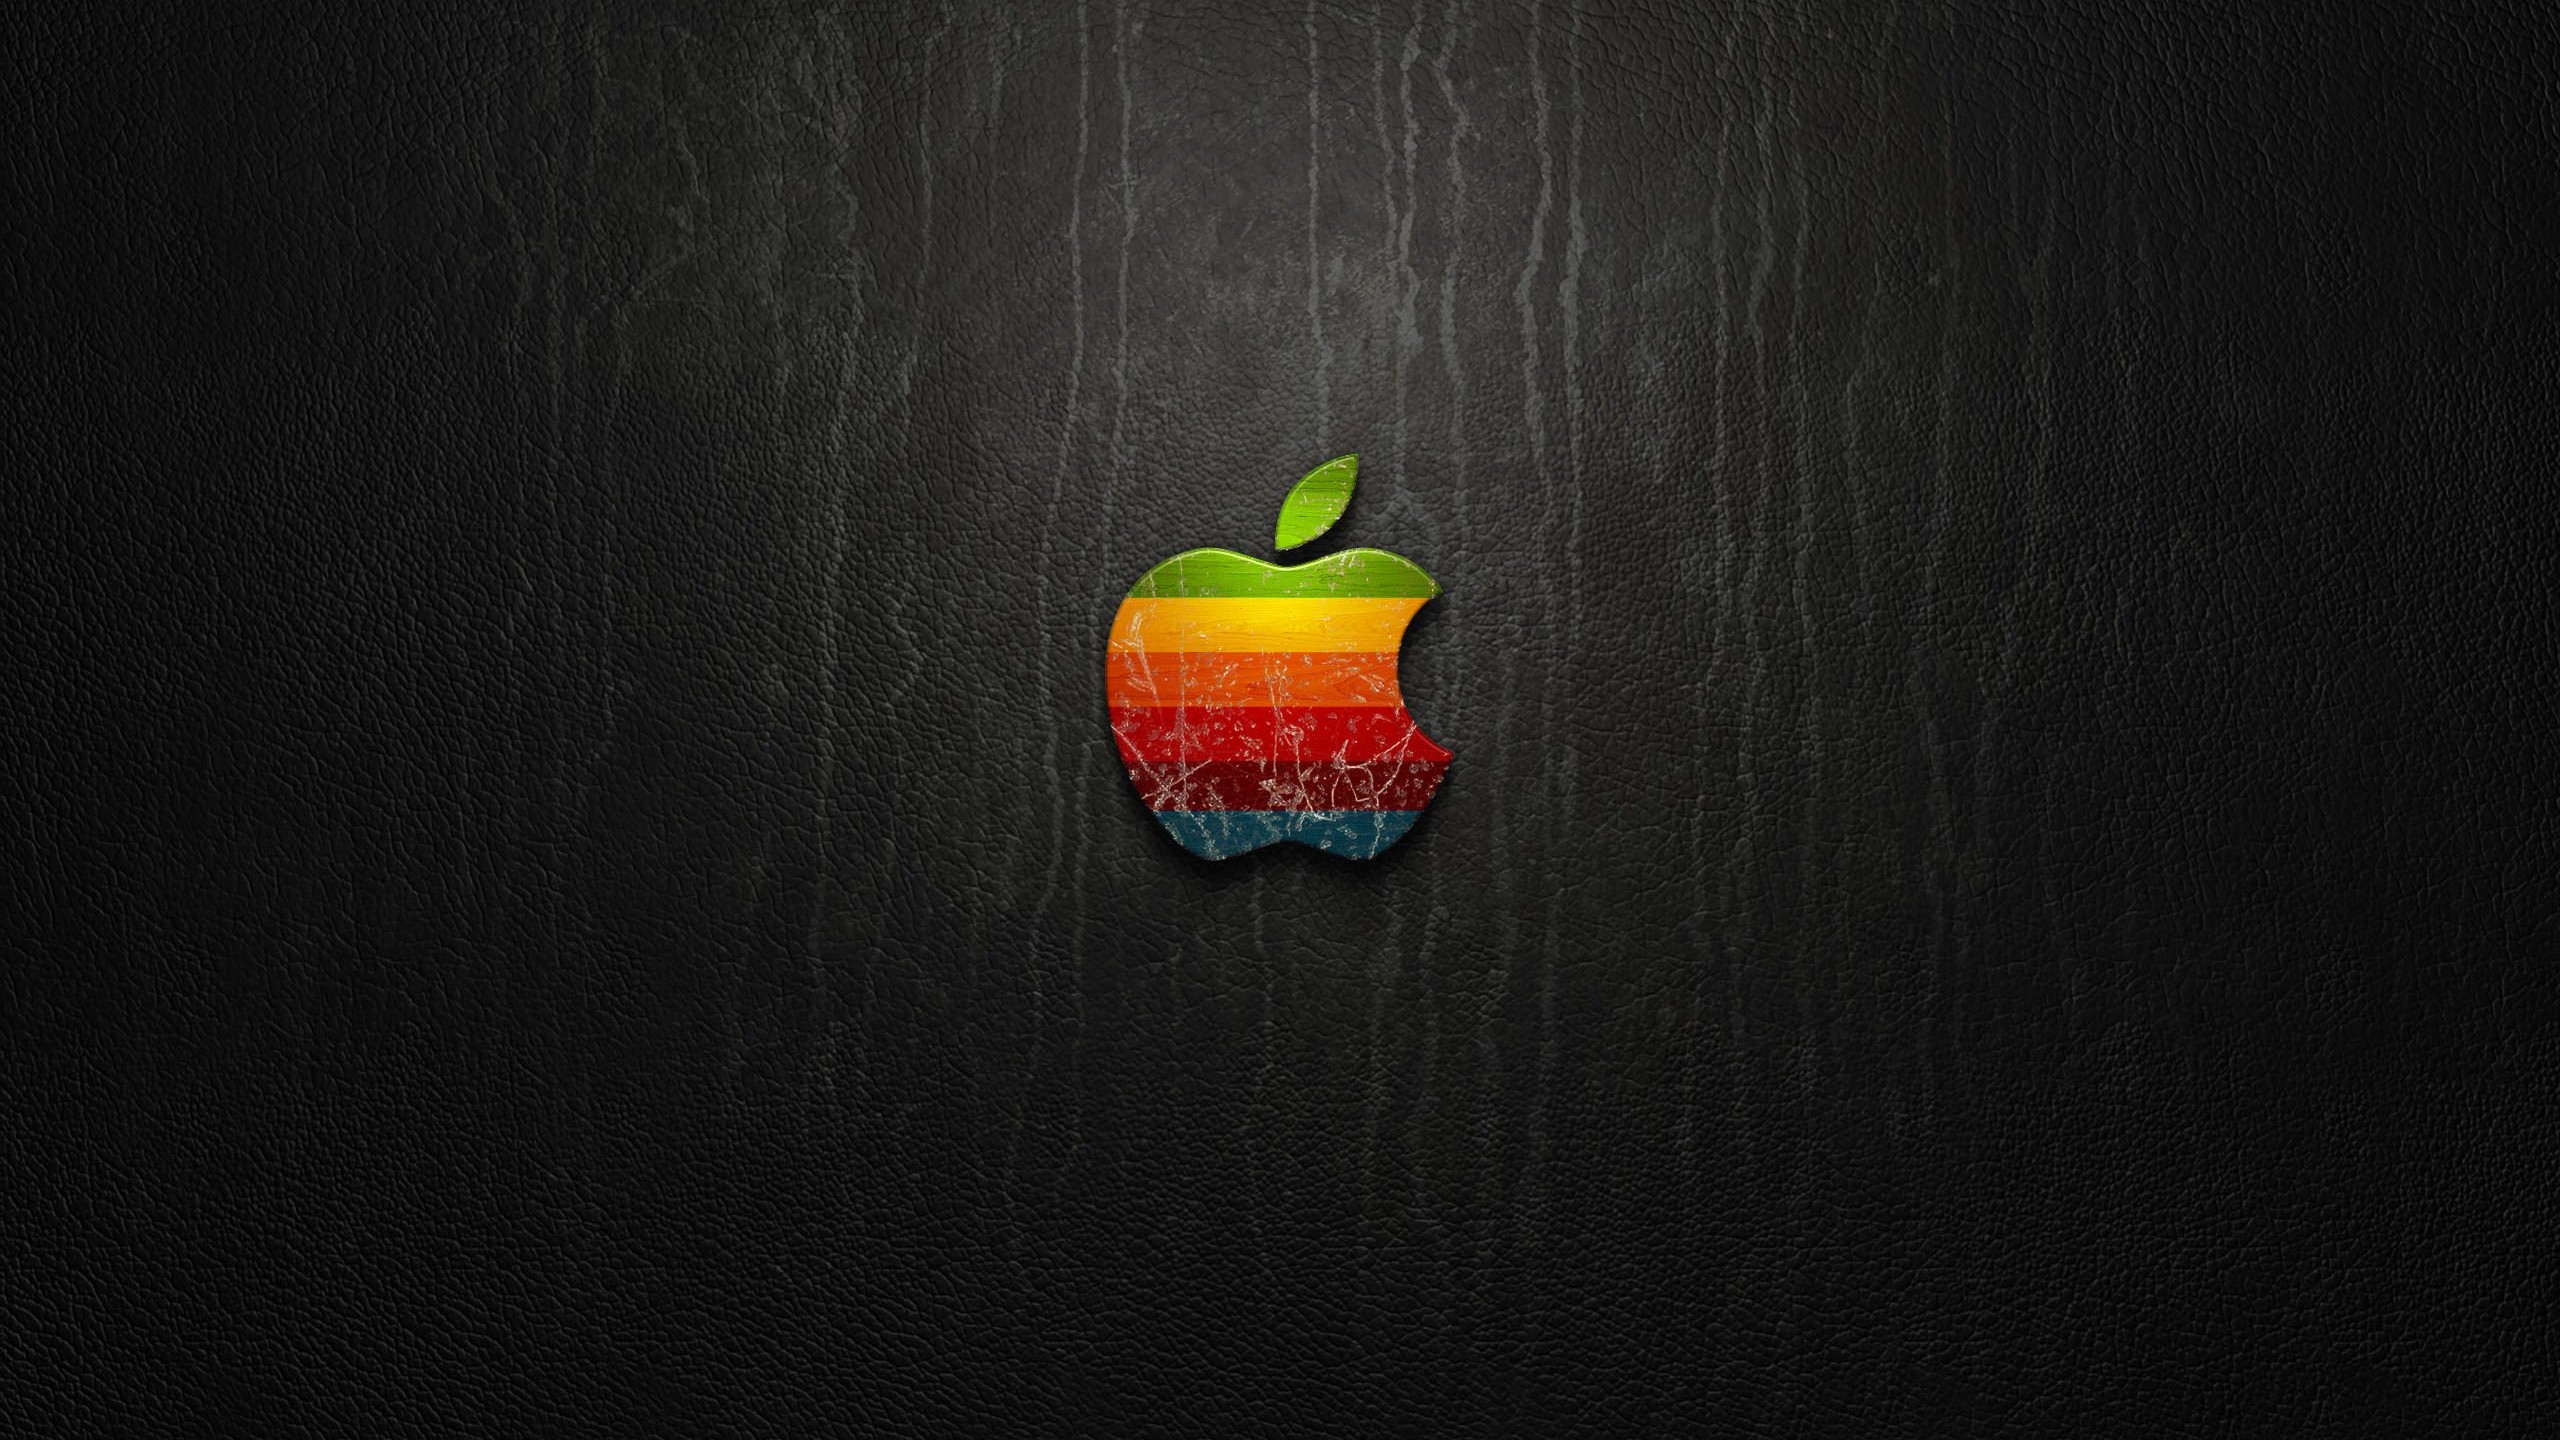 Multicolored Apple Logo Wallpaper for Desktop 2560x1440